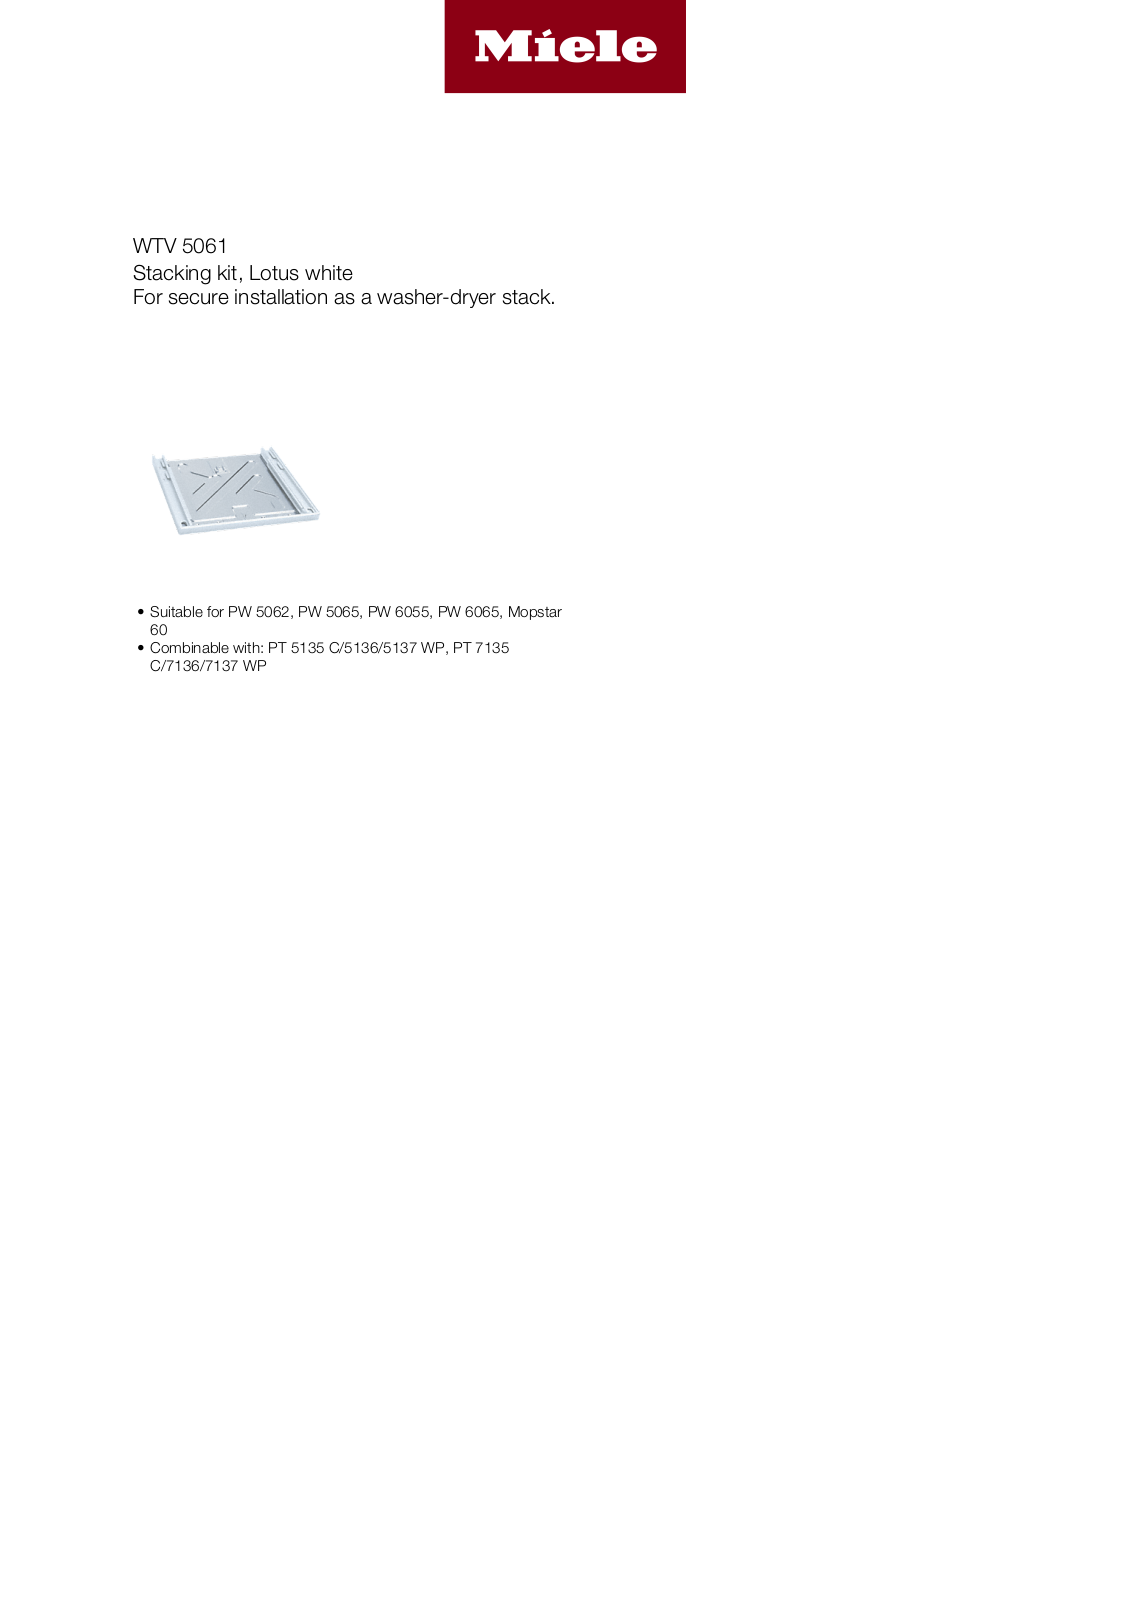 Miele WTV 5061 Product Sheet